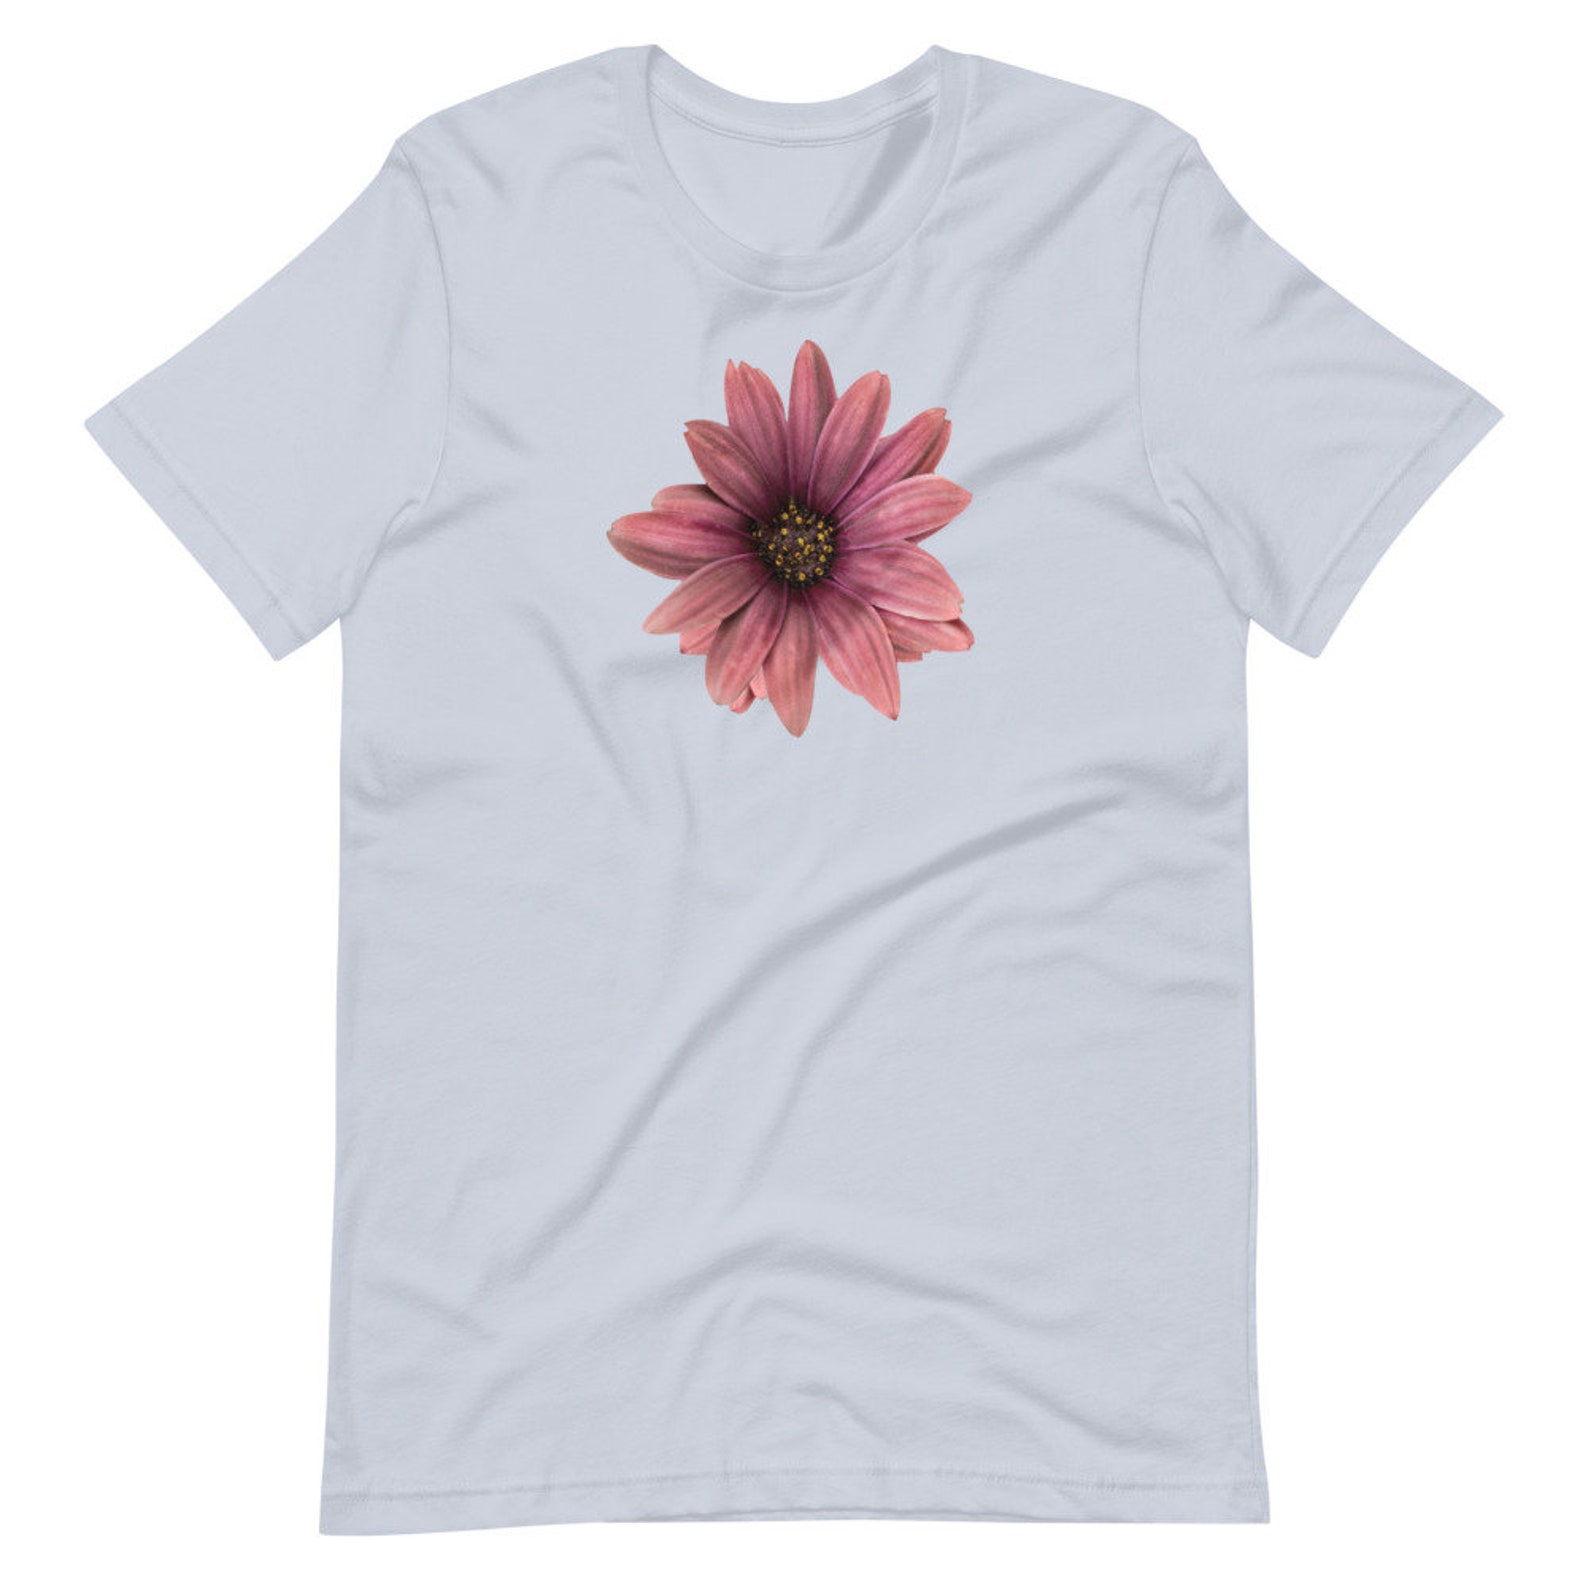 Daisy shirt Wildflower shirt floral t-shirt Gift Birth | Etsy